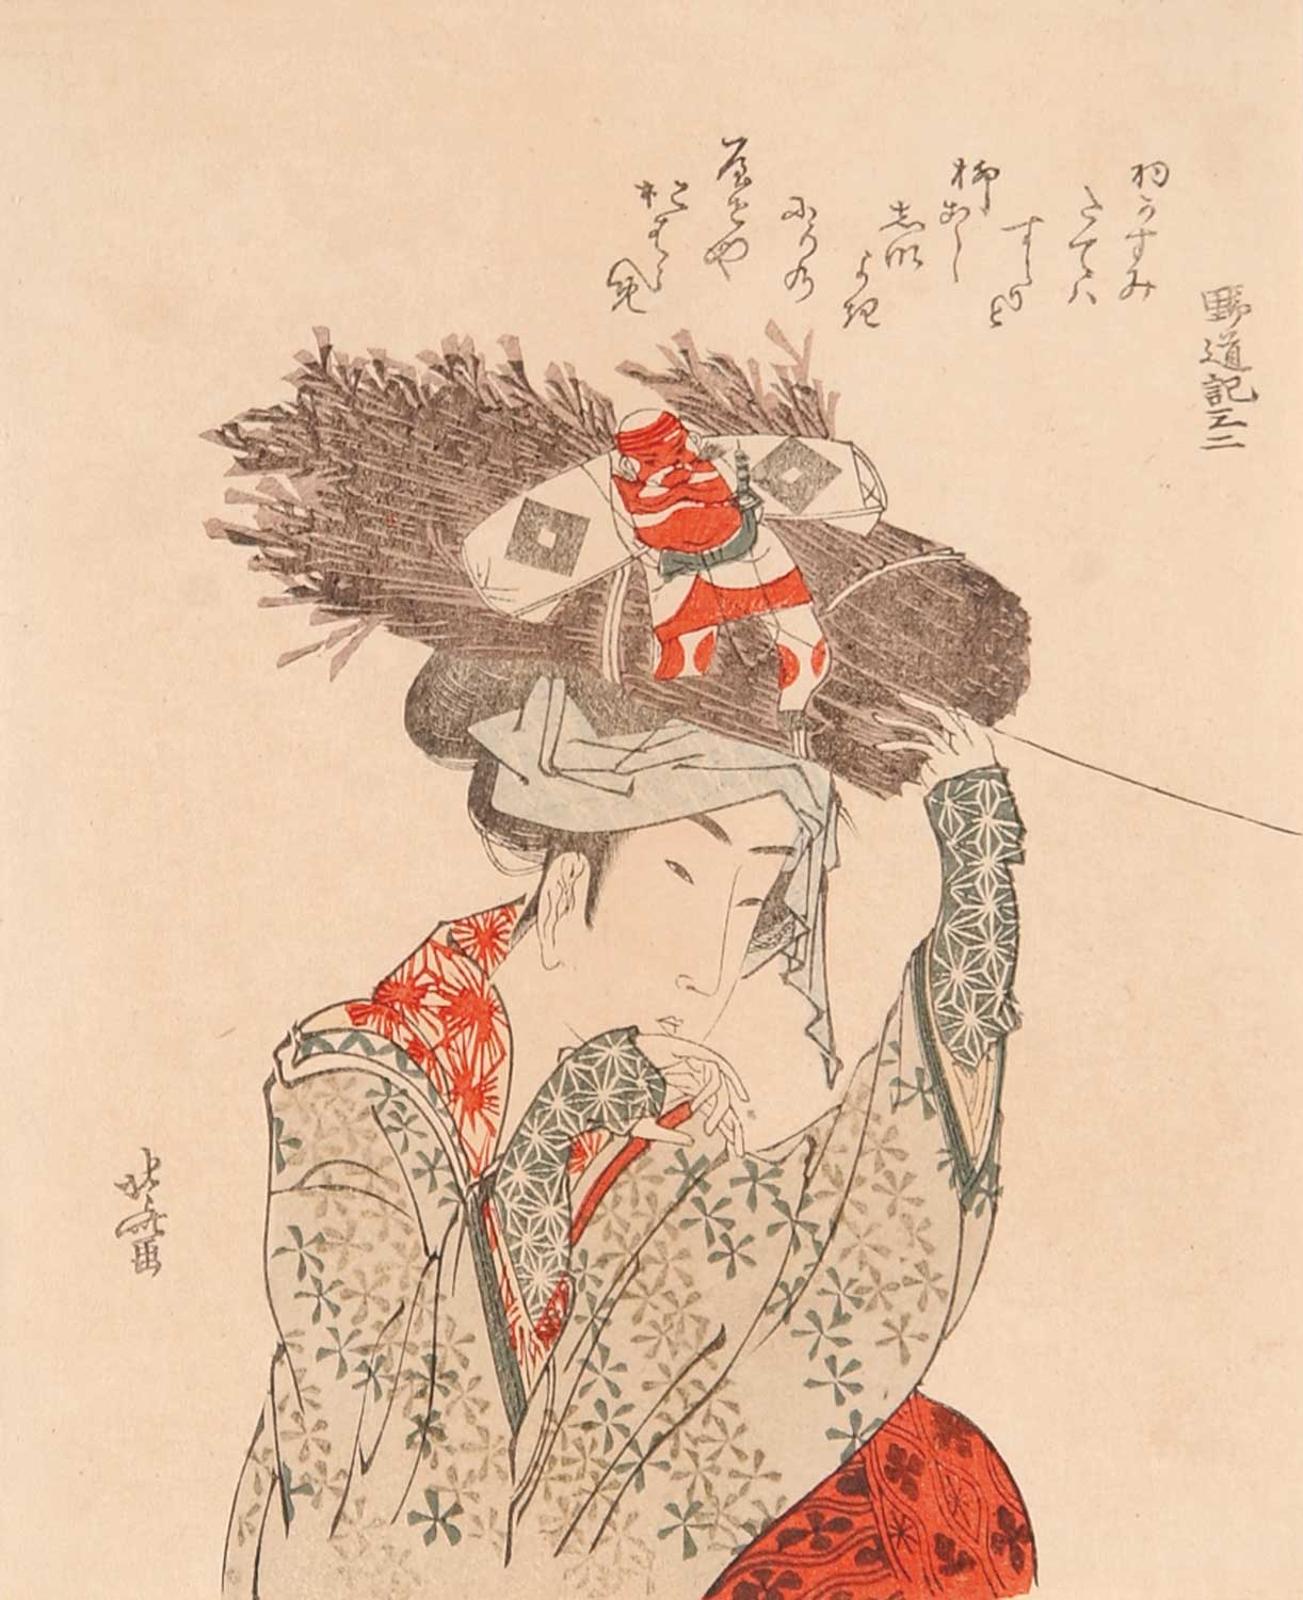 Atributted Katsushika Hokusai - Untitled - Man on My Hat